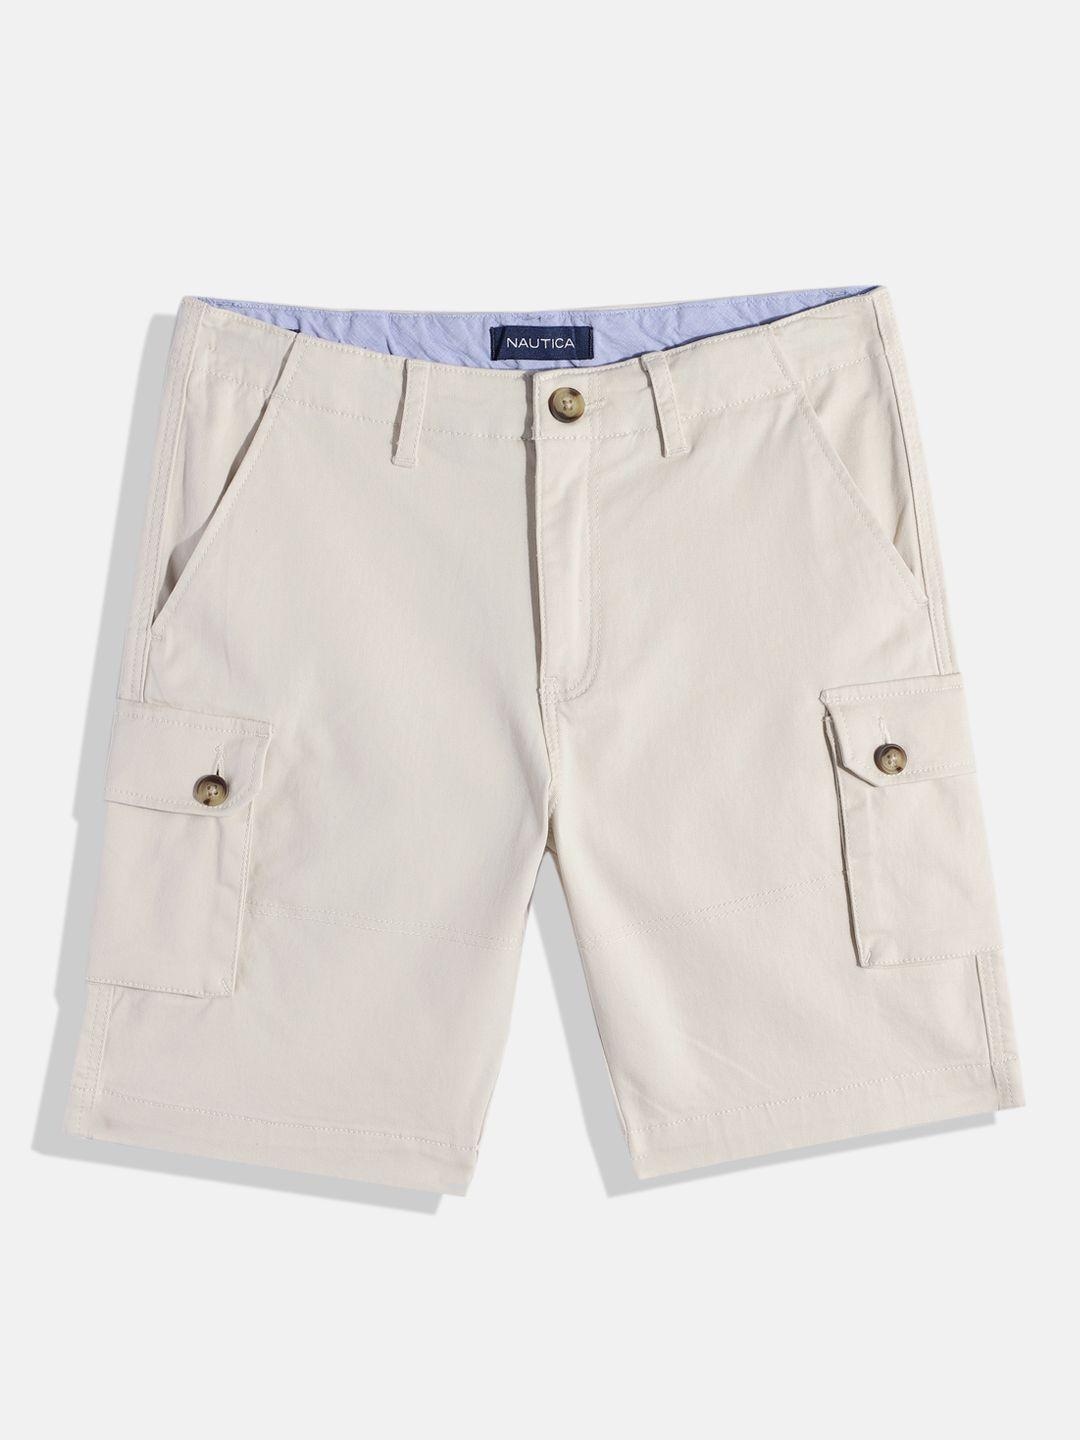 nautica boys slim fit cargo shorts